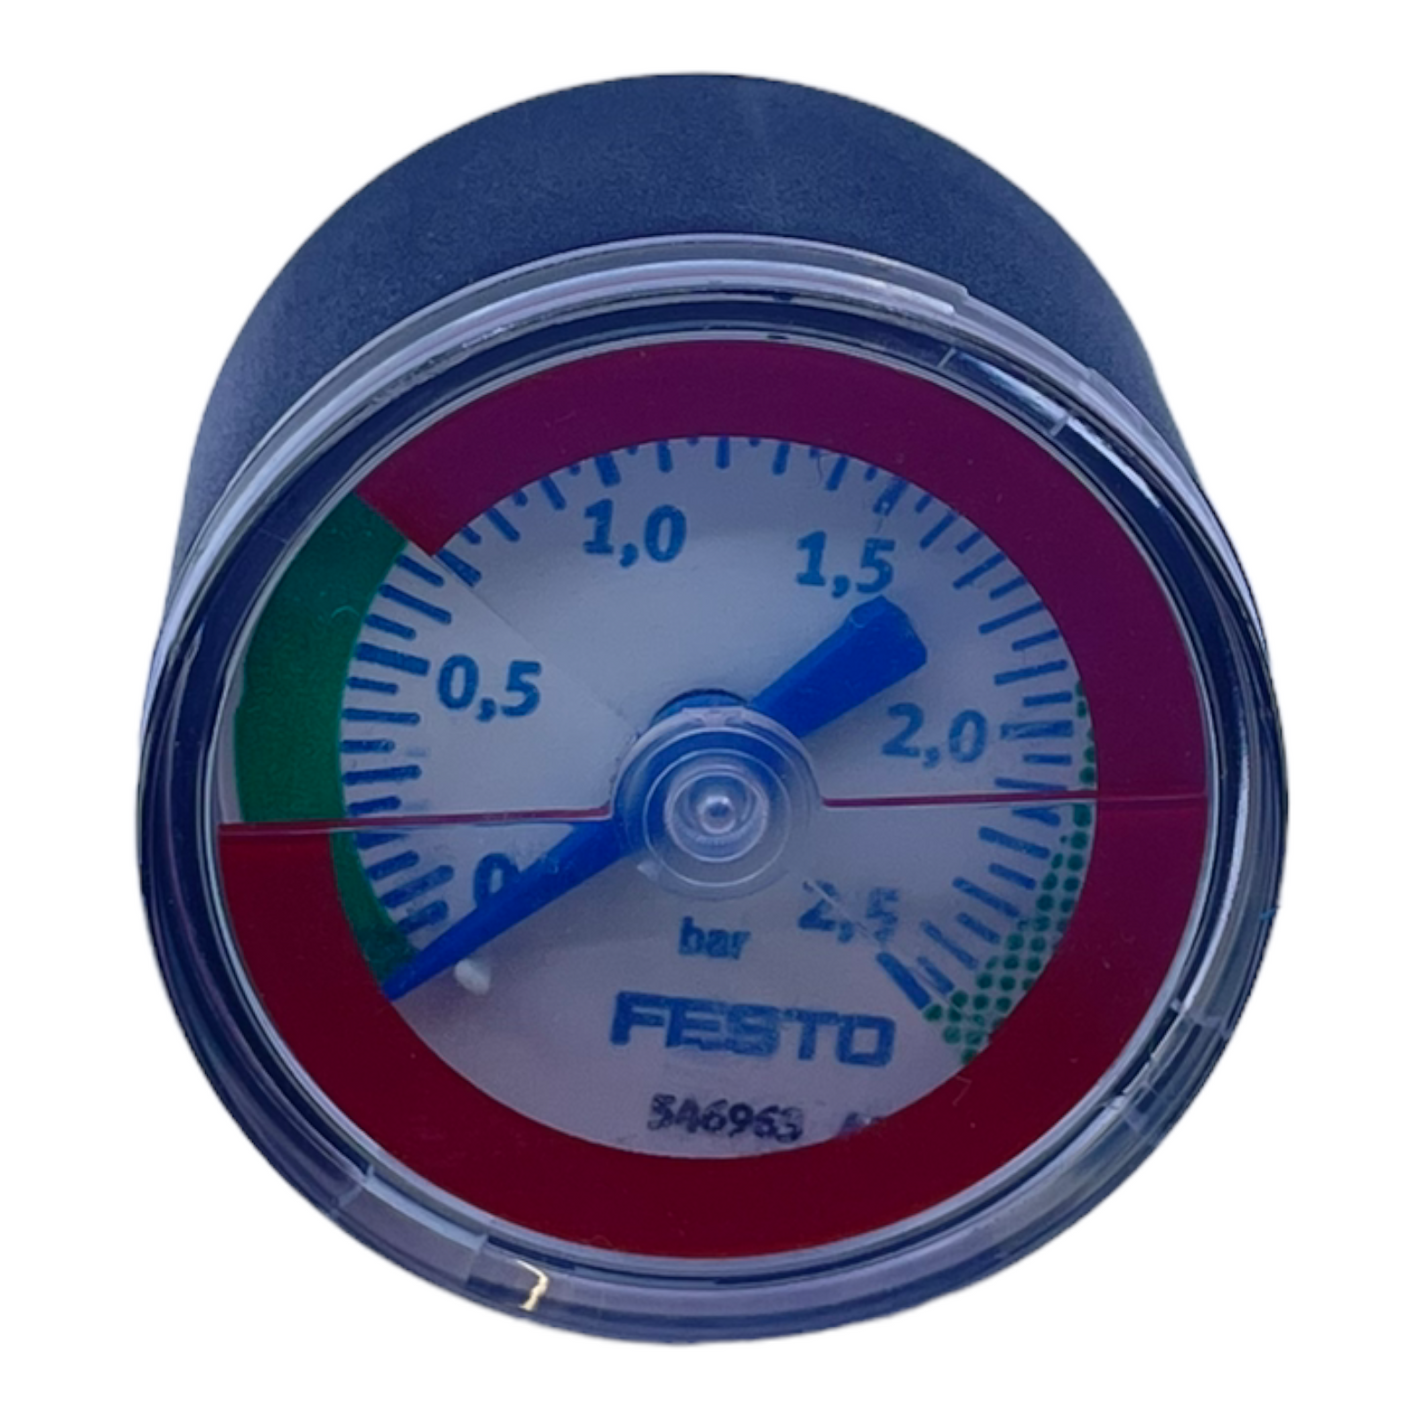 Festo MA-40-2,5-R1/8-E-RG pressure gauge 546963 for industrial use